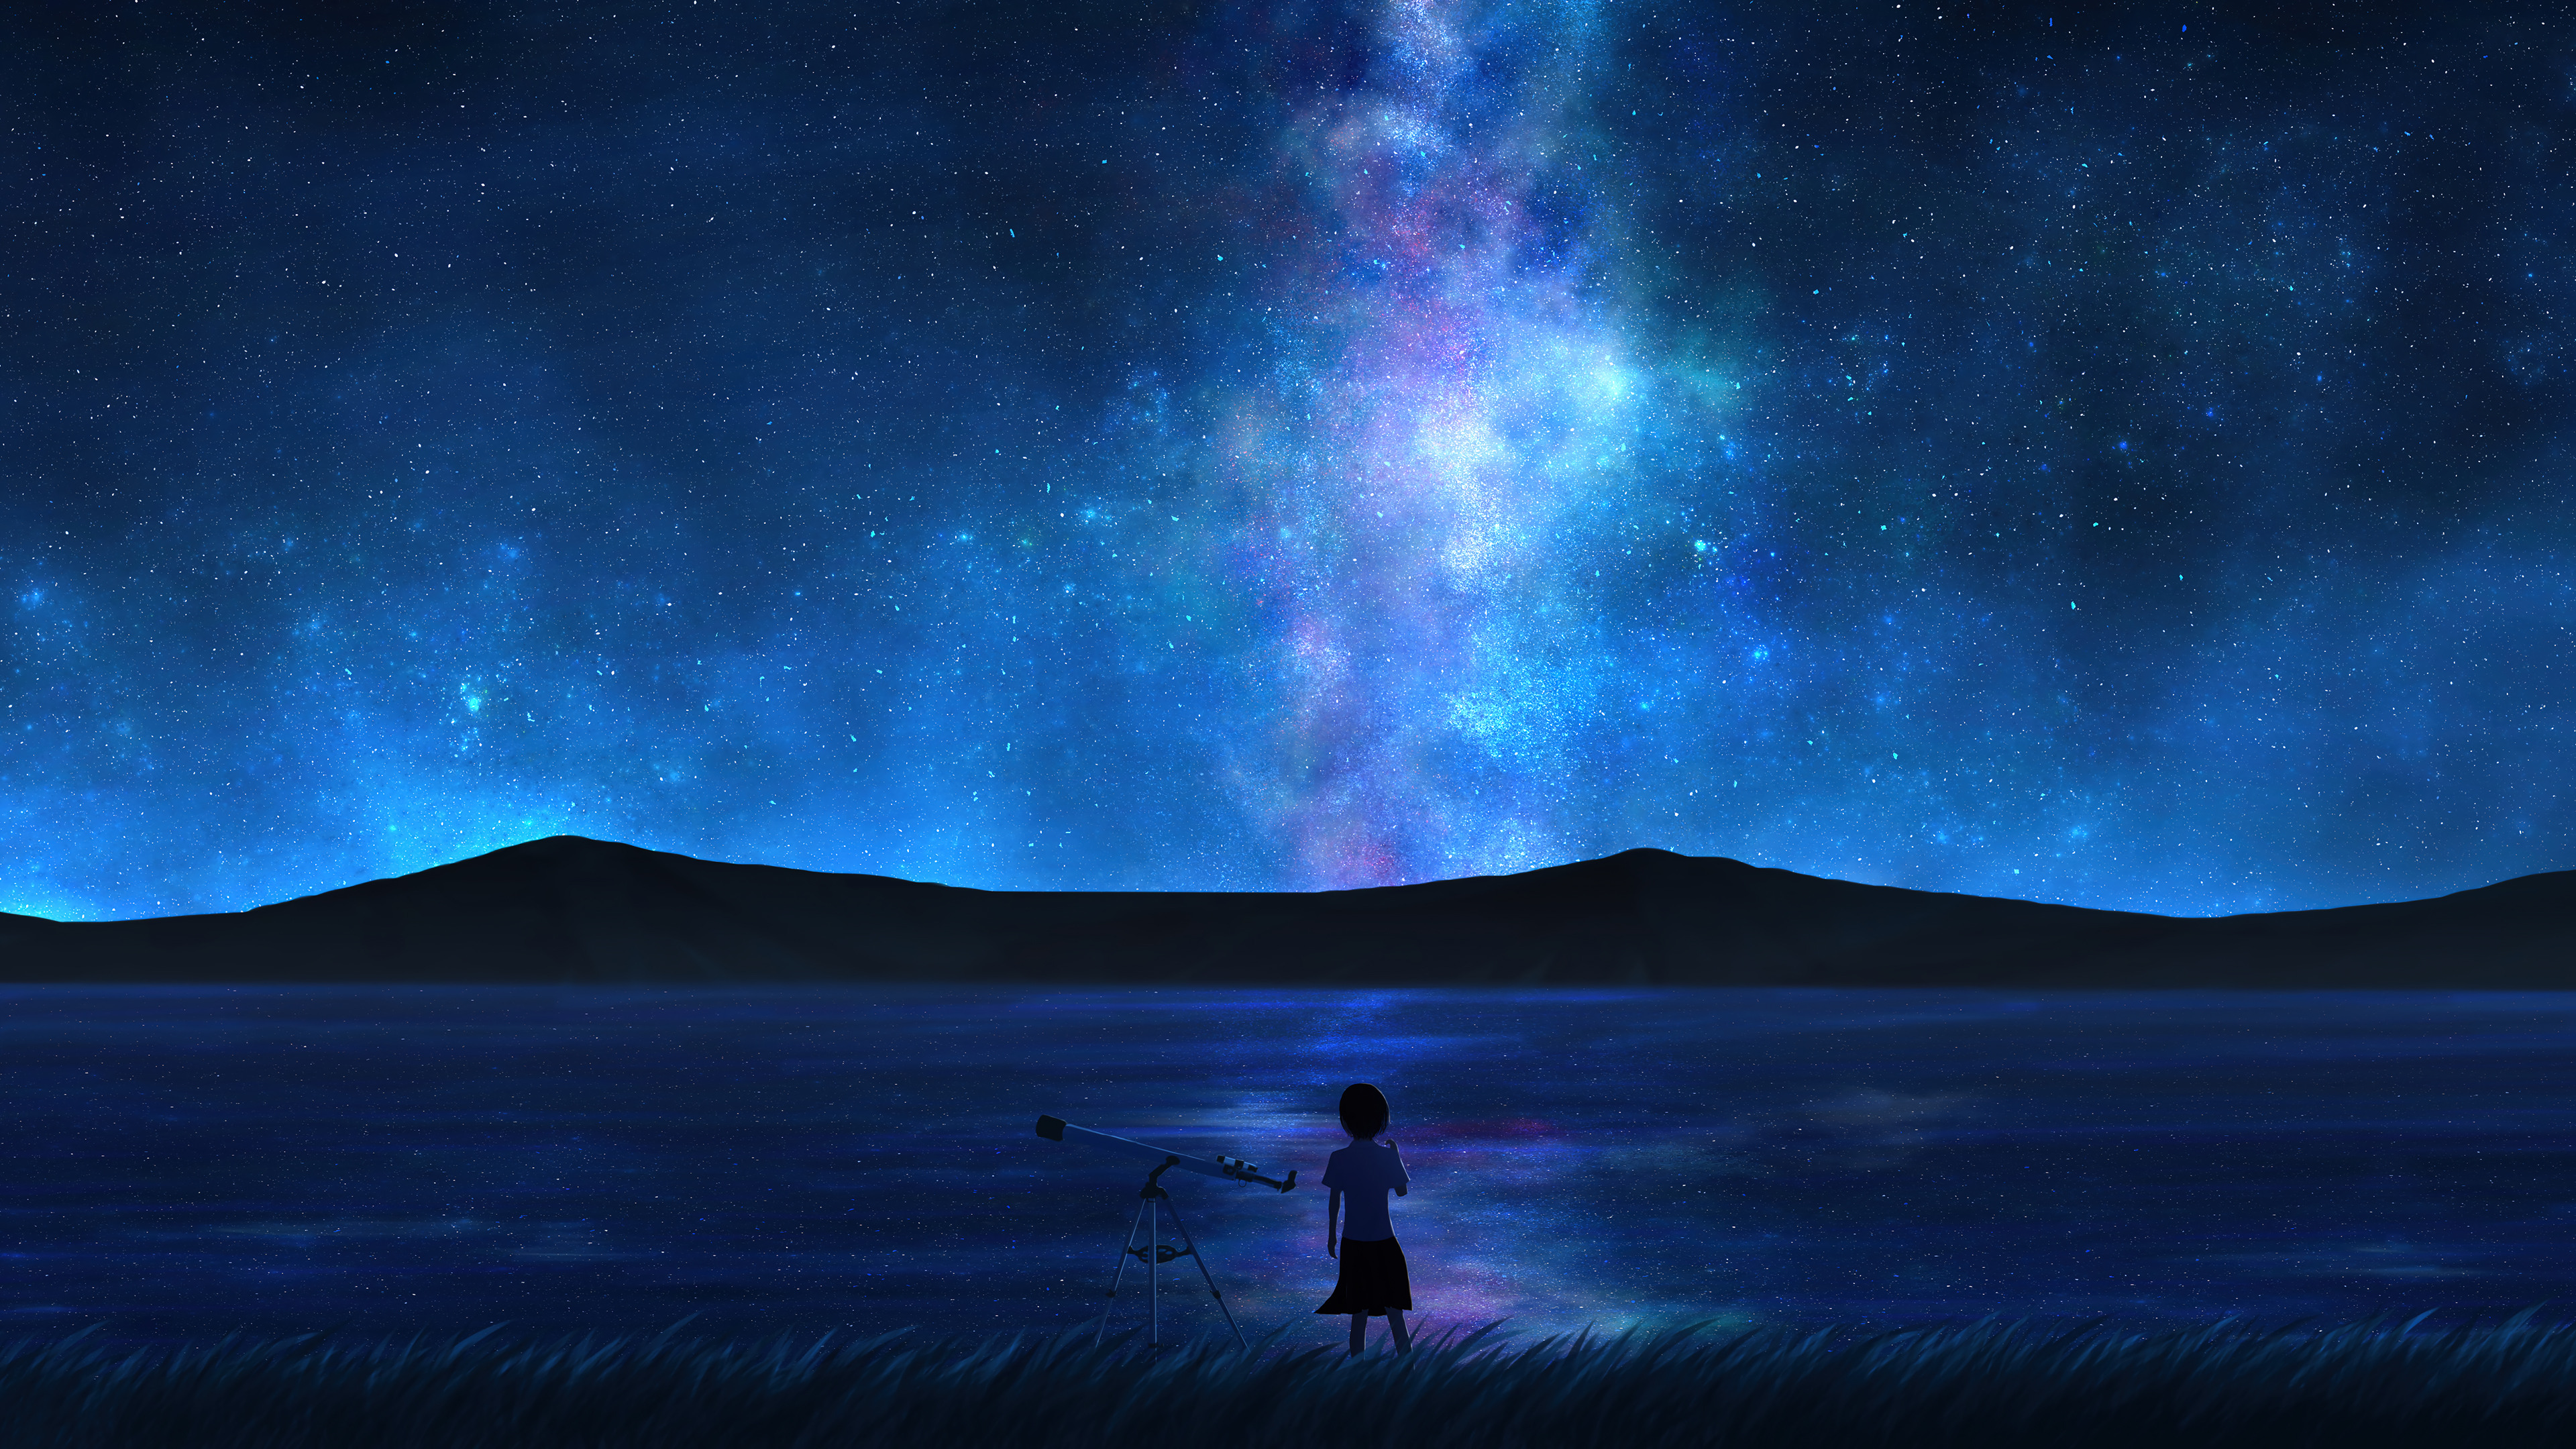 Stargazing Stars Night Sky Scenery Anime Art PC DeskK Wallpaper free Download